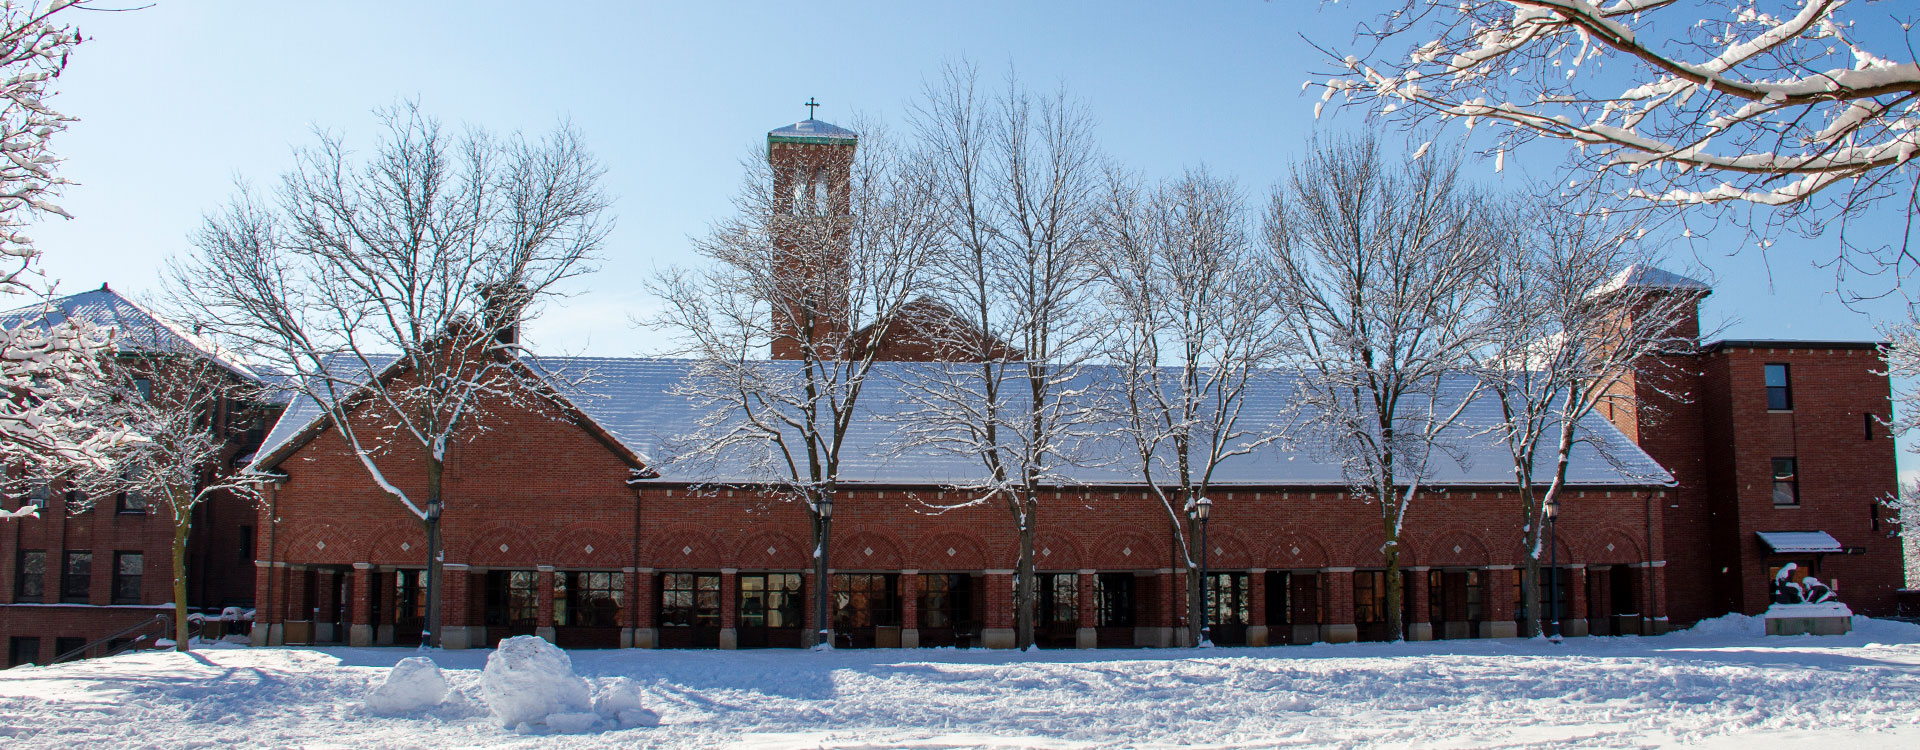 Campus Center in winter